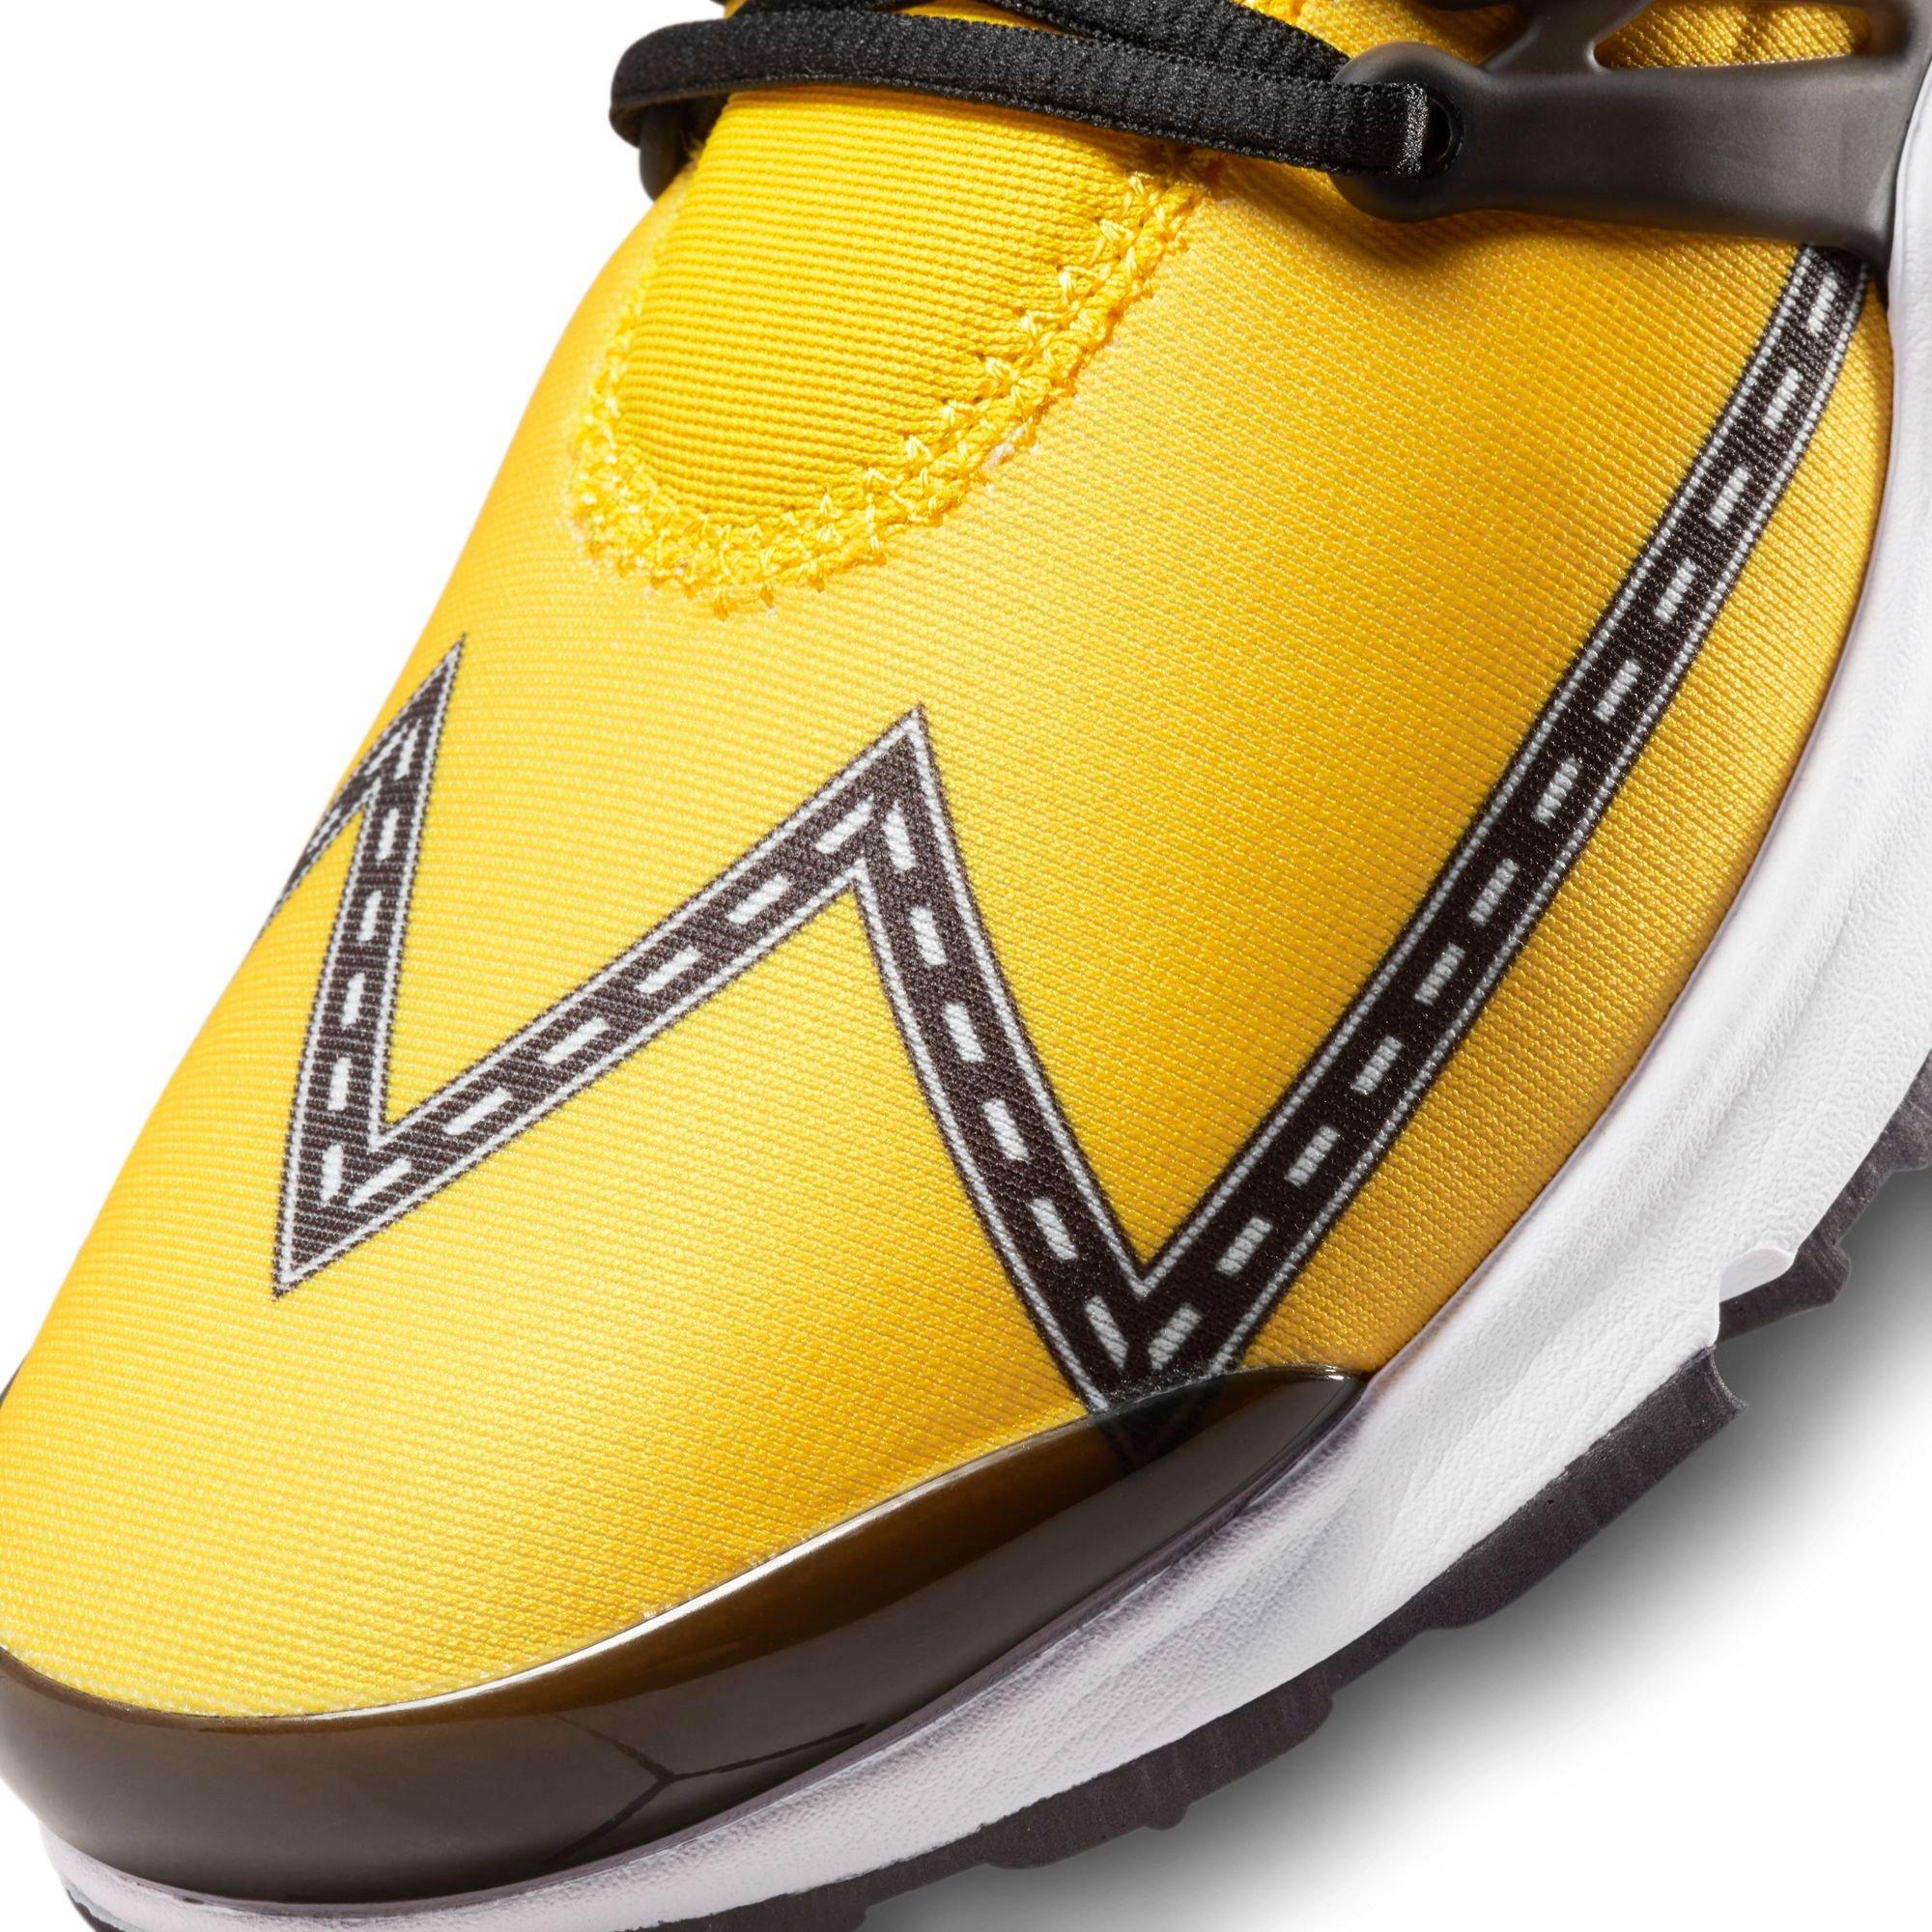 Vergelijking Sluipmoordenaar klok Nike Air Presto "Speed Yellow/Black/University Red/White" Men's Shoe